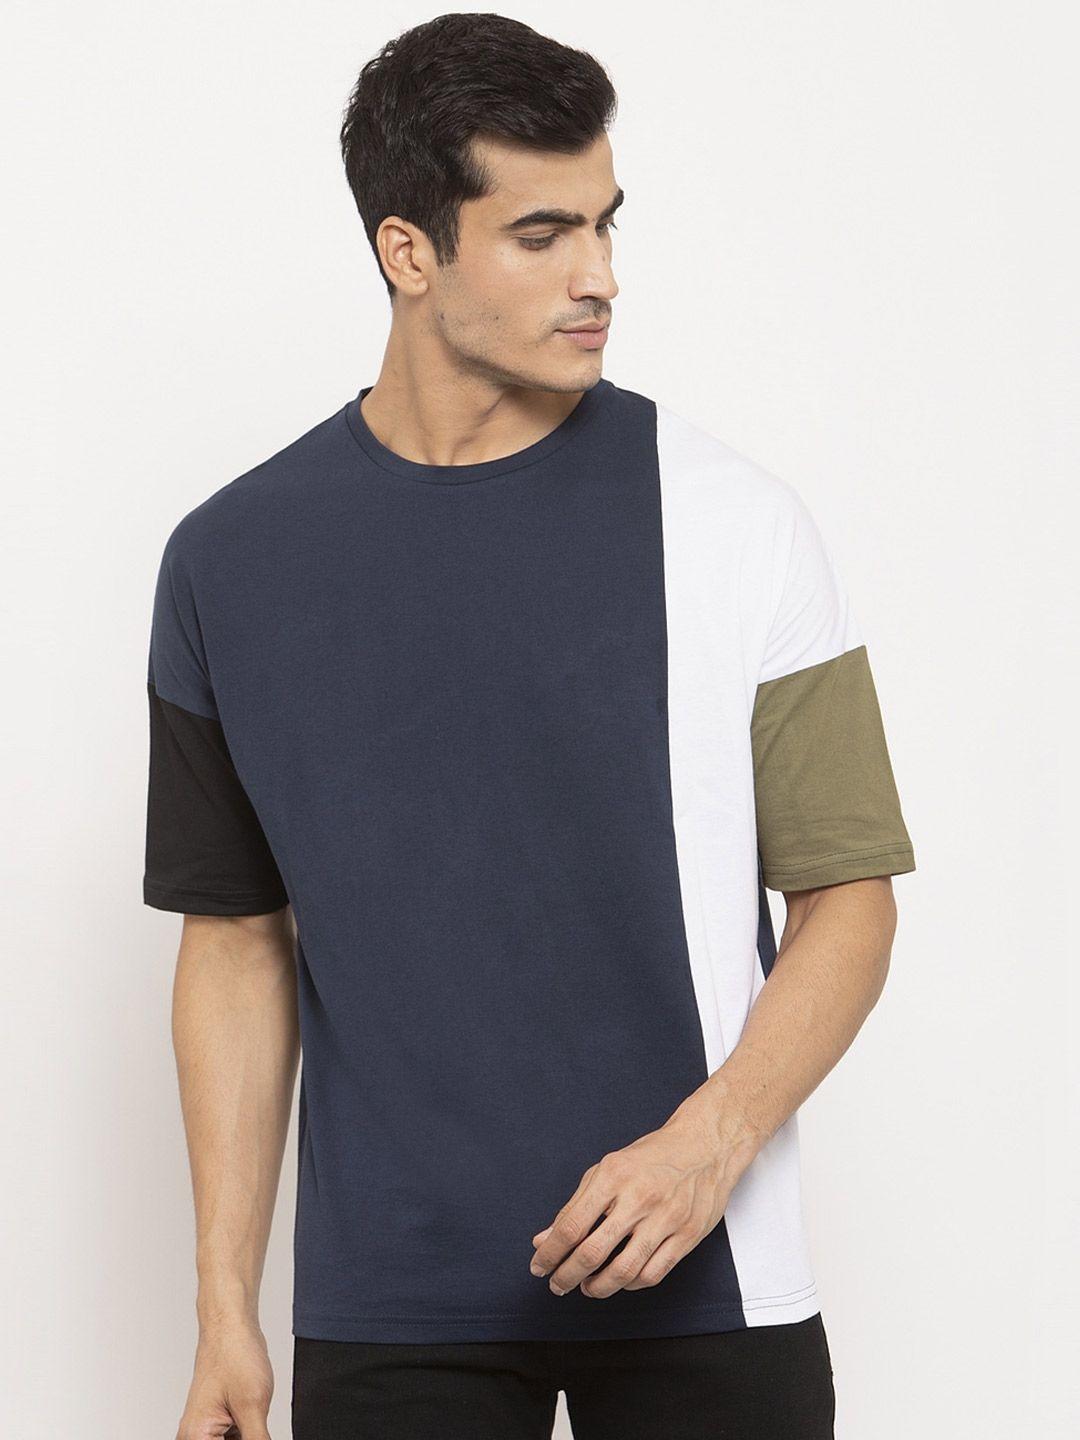 door74-men-blue-&-white-colourblocked-extended-sleeves-boxy-cotton-t-shirt